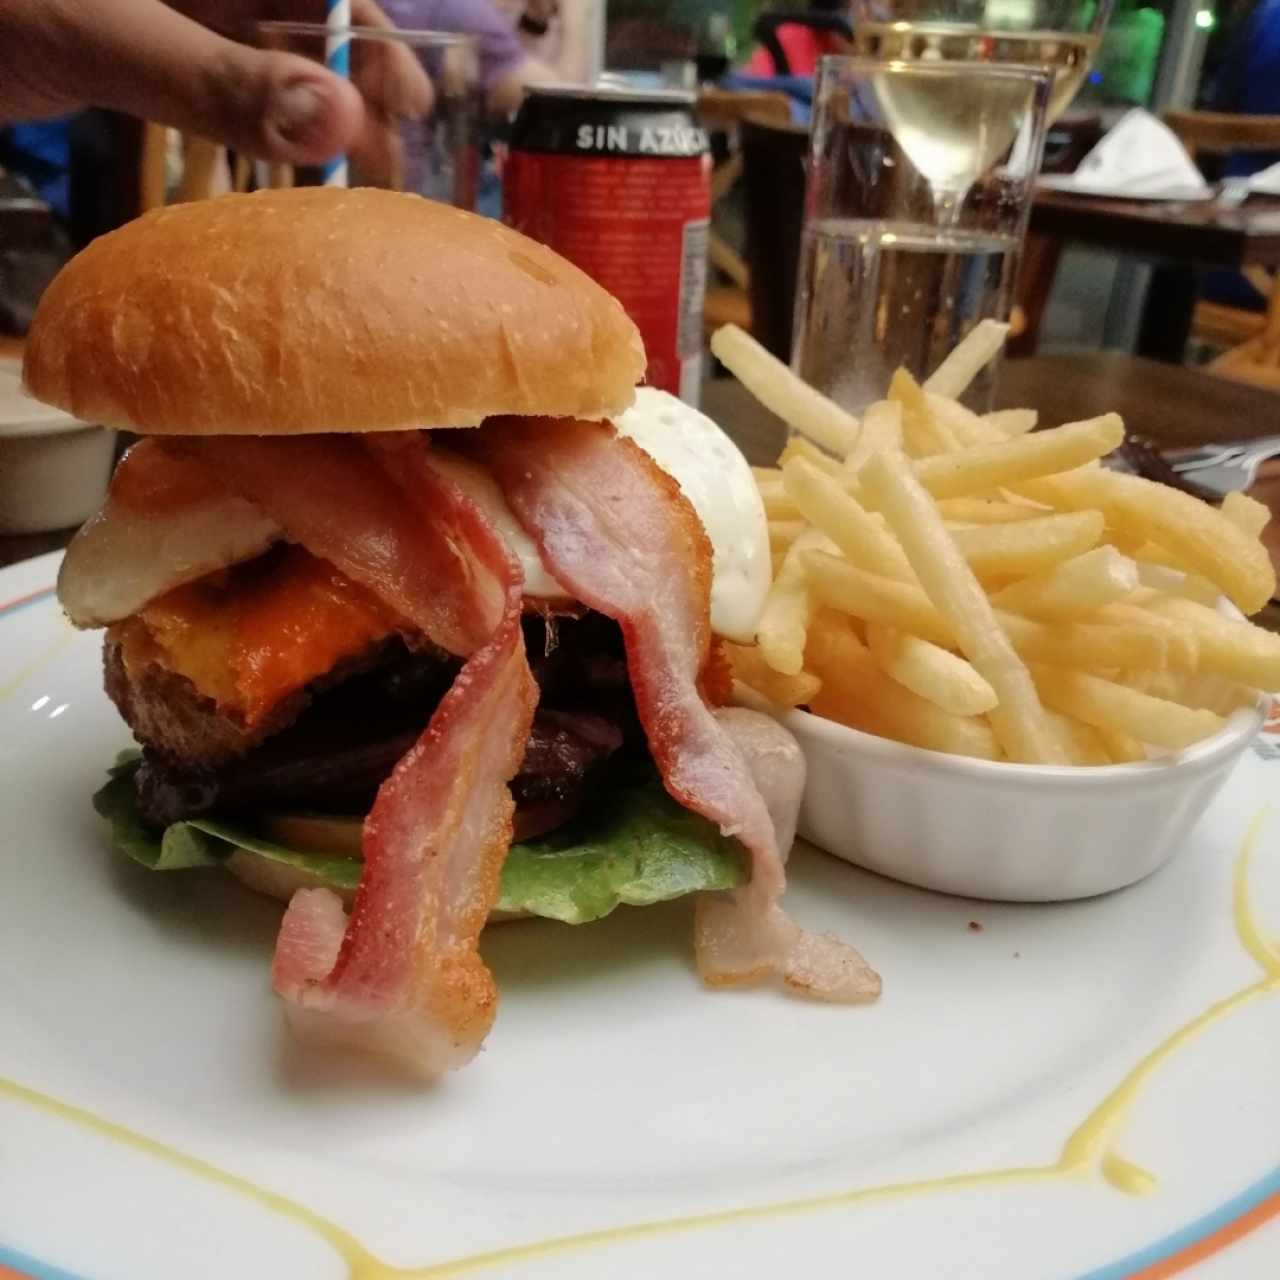 Hamburguesas - Churrasco burger